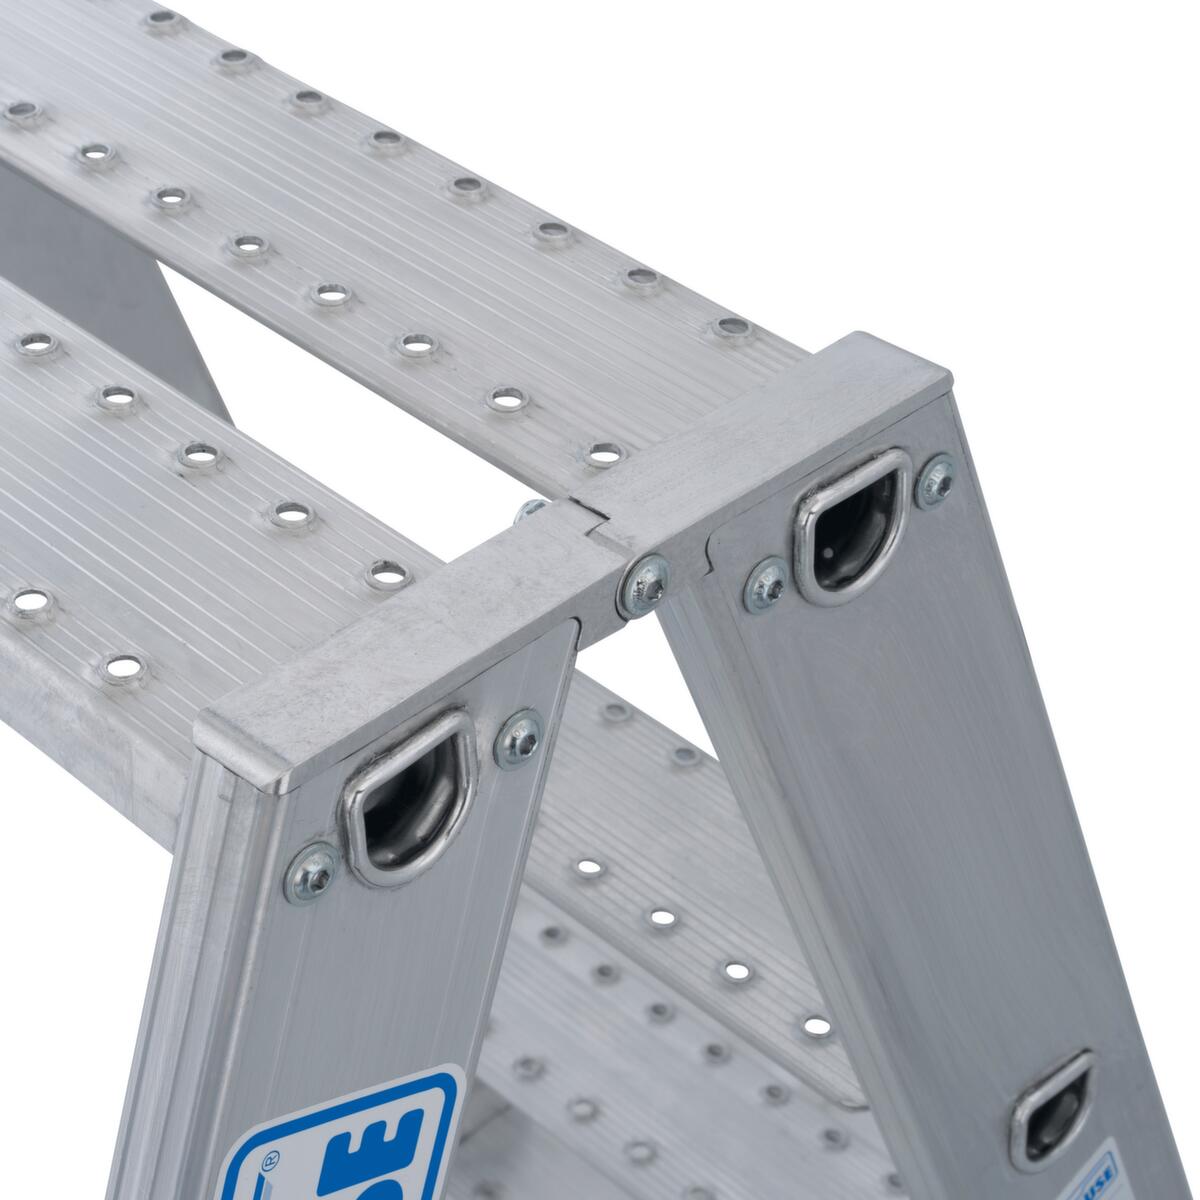 Krause dubbele ladder STABILO® Professional, 2 x 7 treden met R13-laag  ZOOM